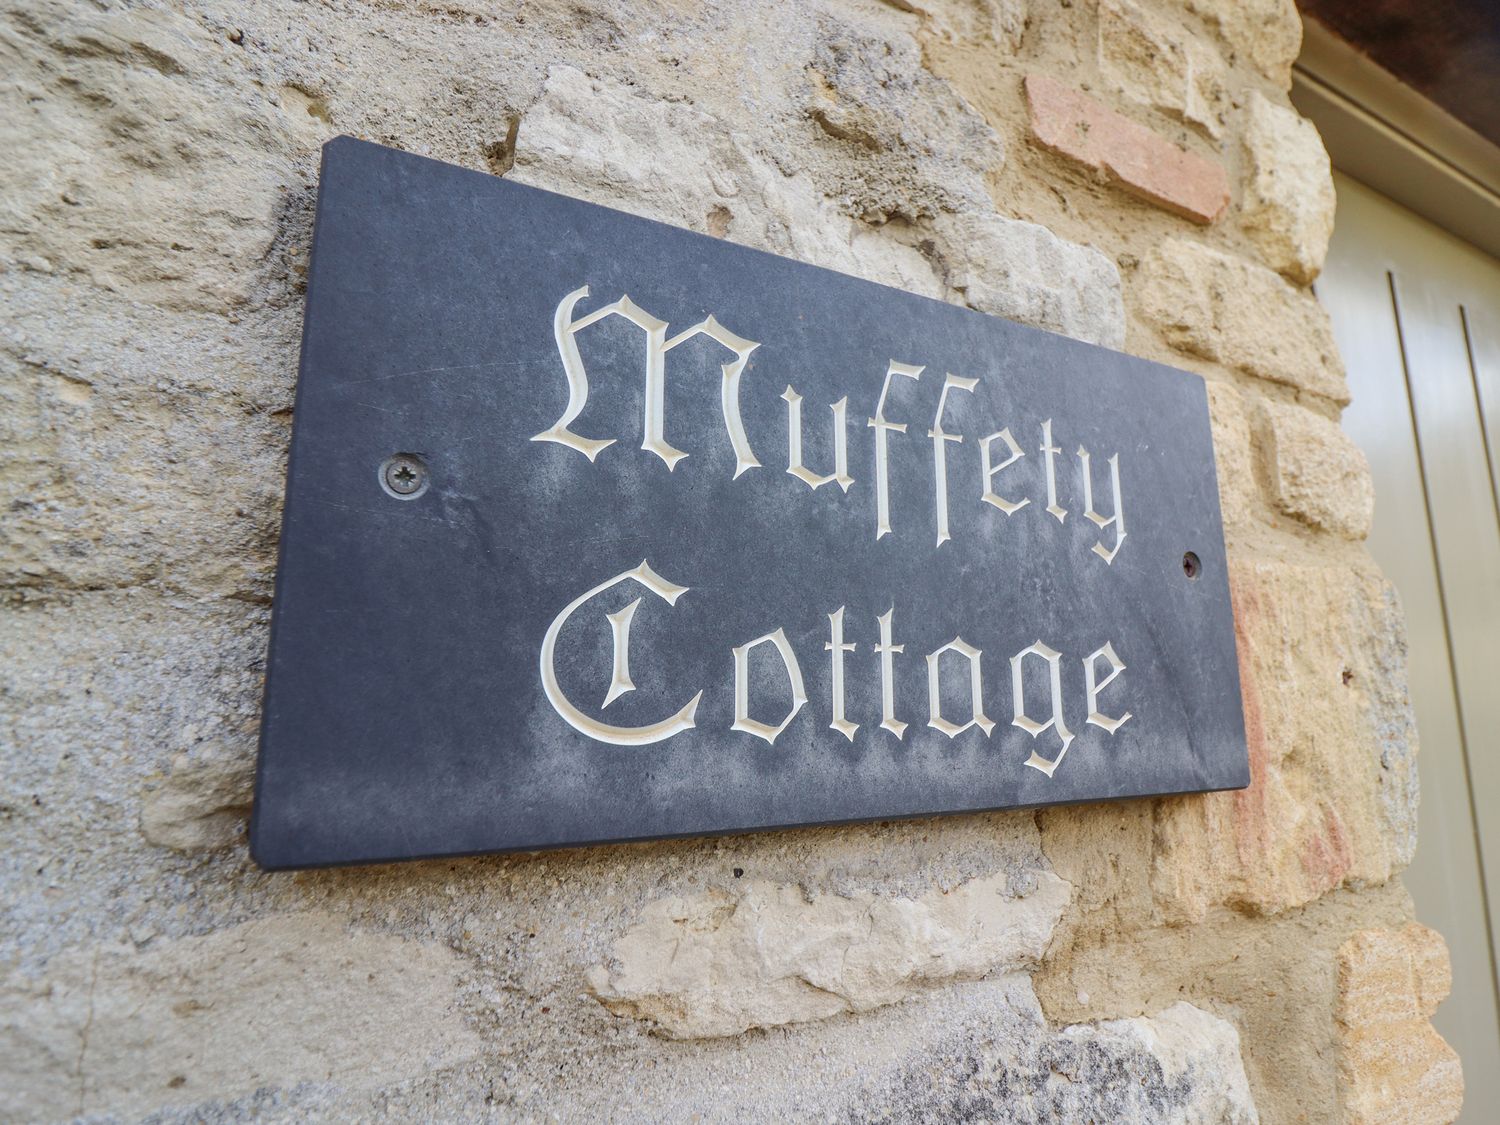 Muffety Cottage, Burford